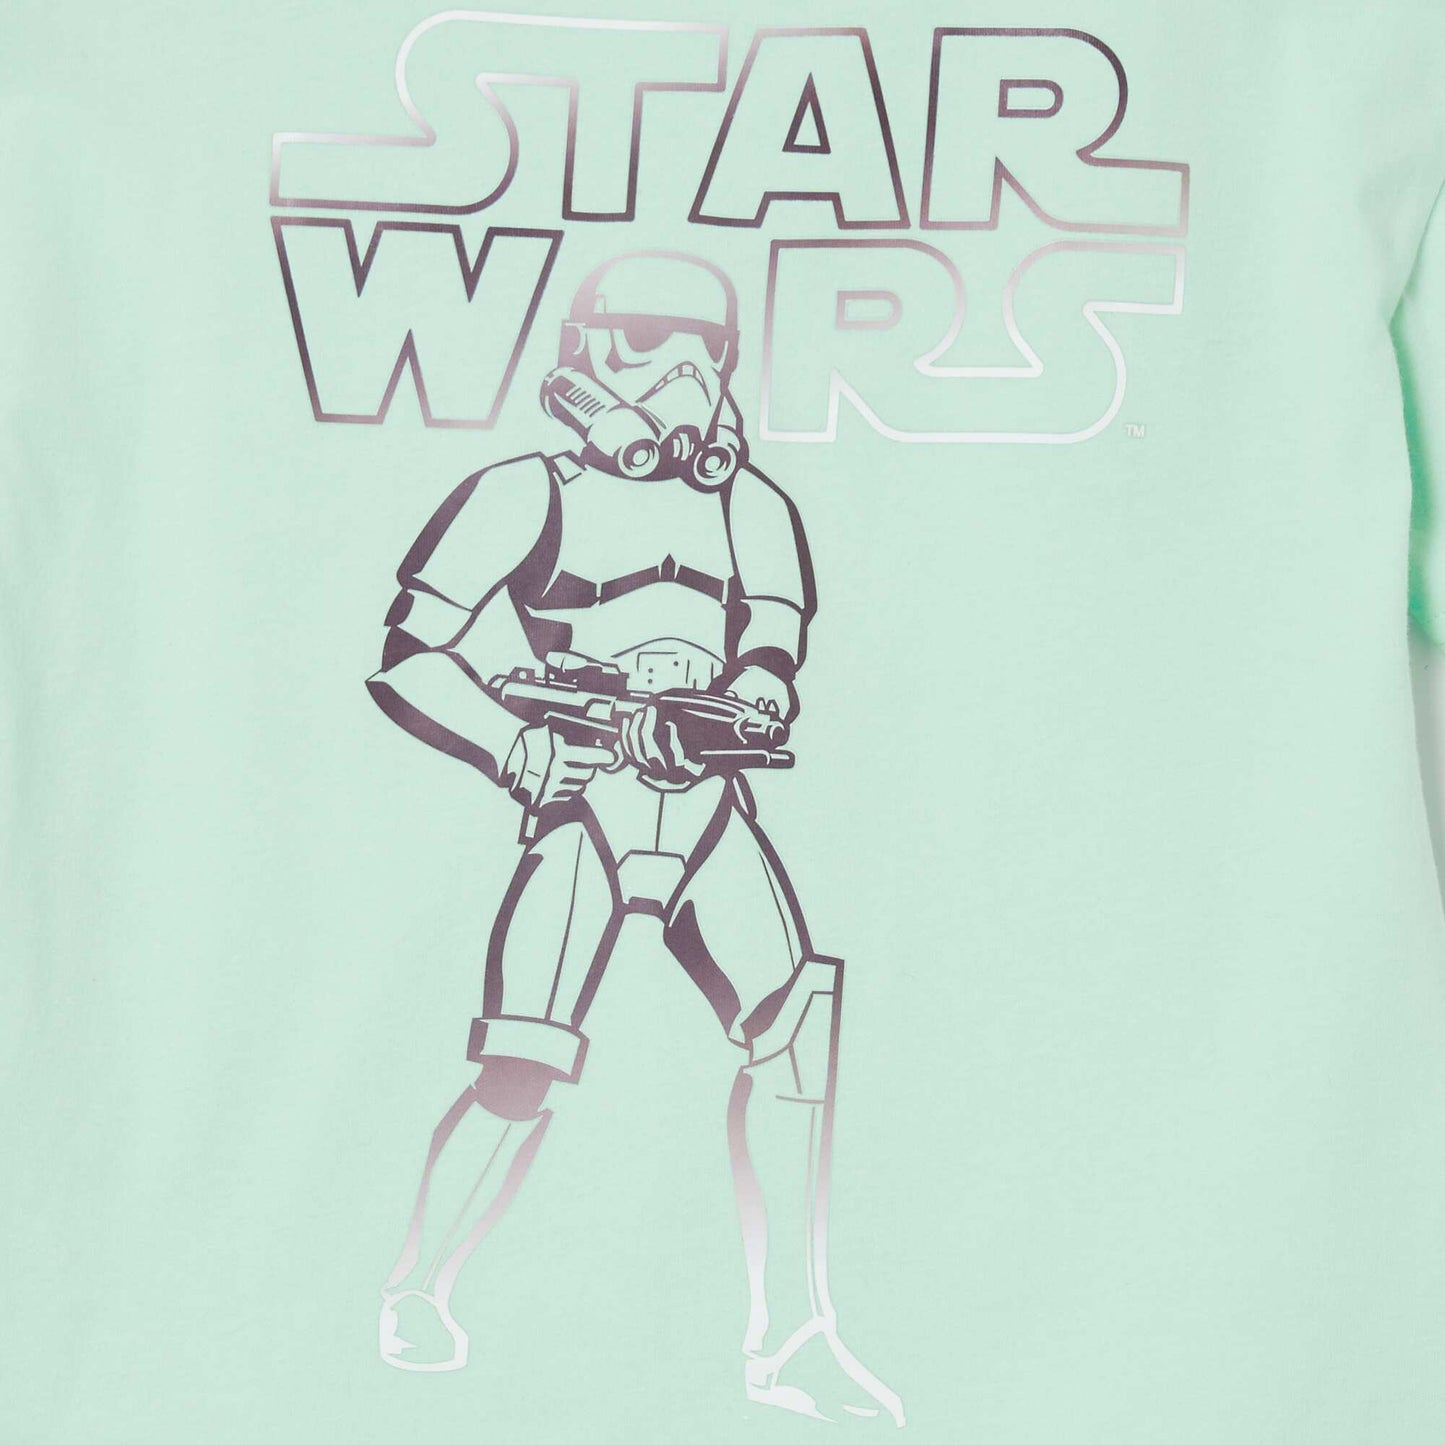 Star Wars loose-fit T-shirt GREEN